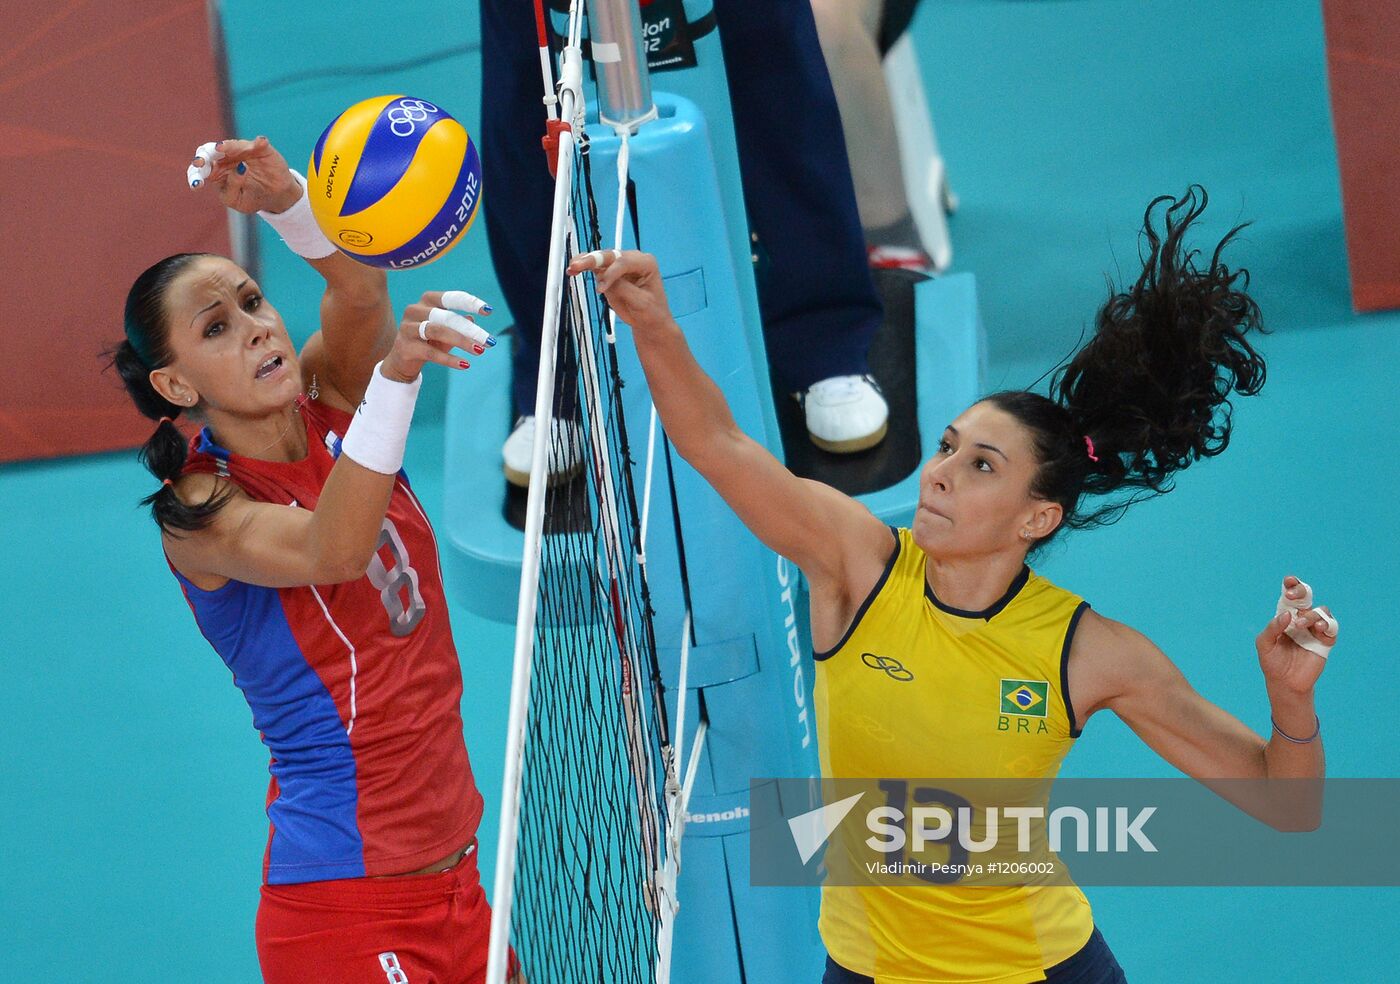 2012 Olympics. Women's Volleyball. Russia vs. Brazil